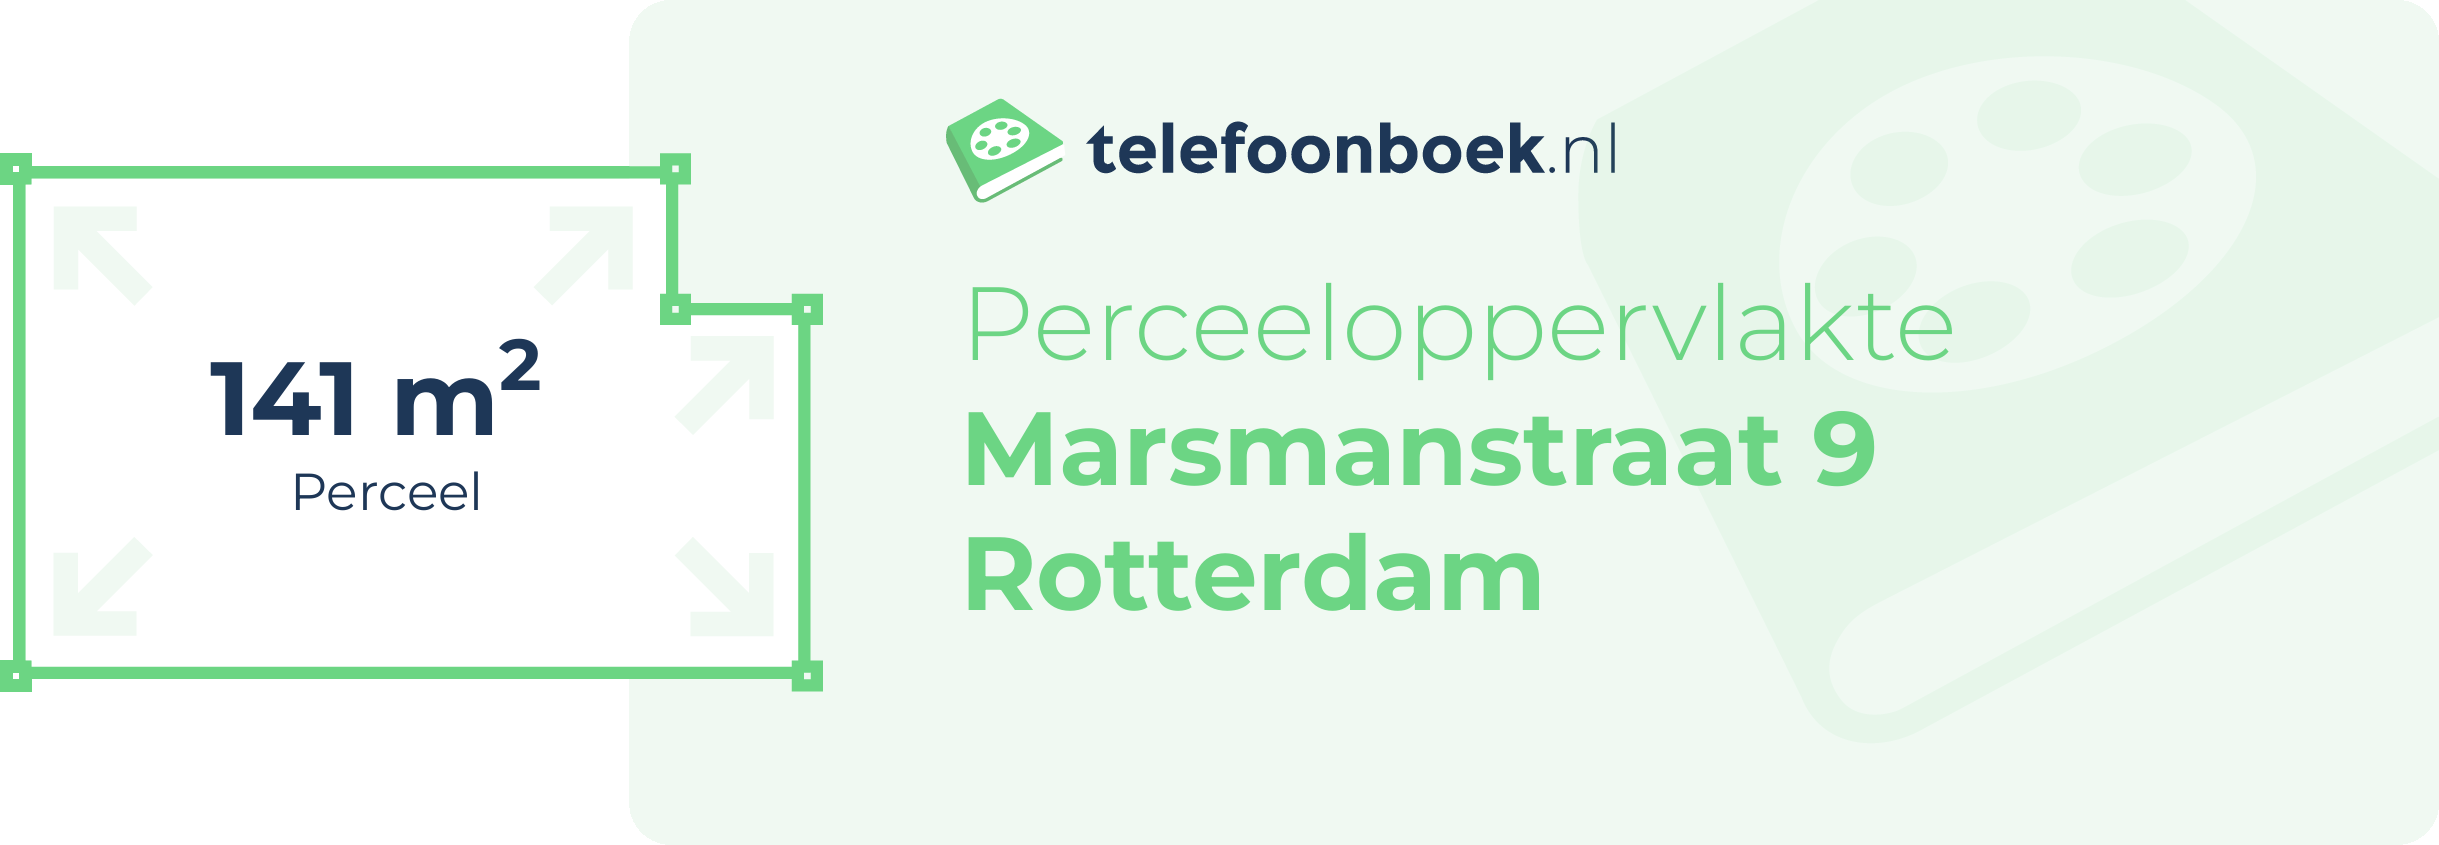 Perceeloppervlakte Marsmanstraat 9 Rotterdam